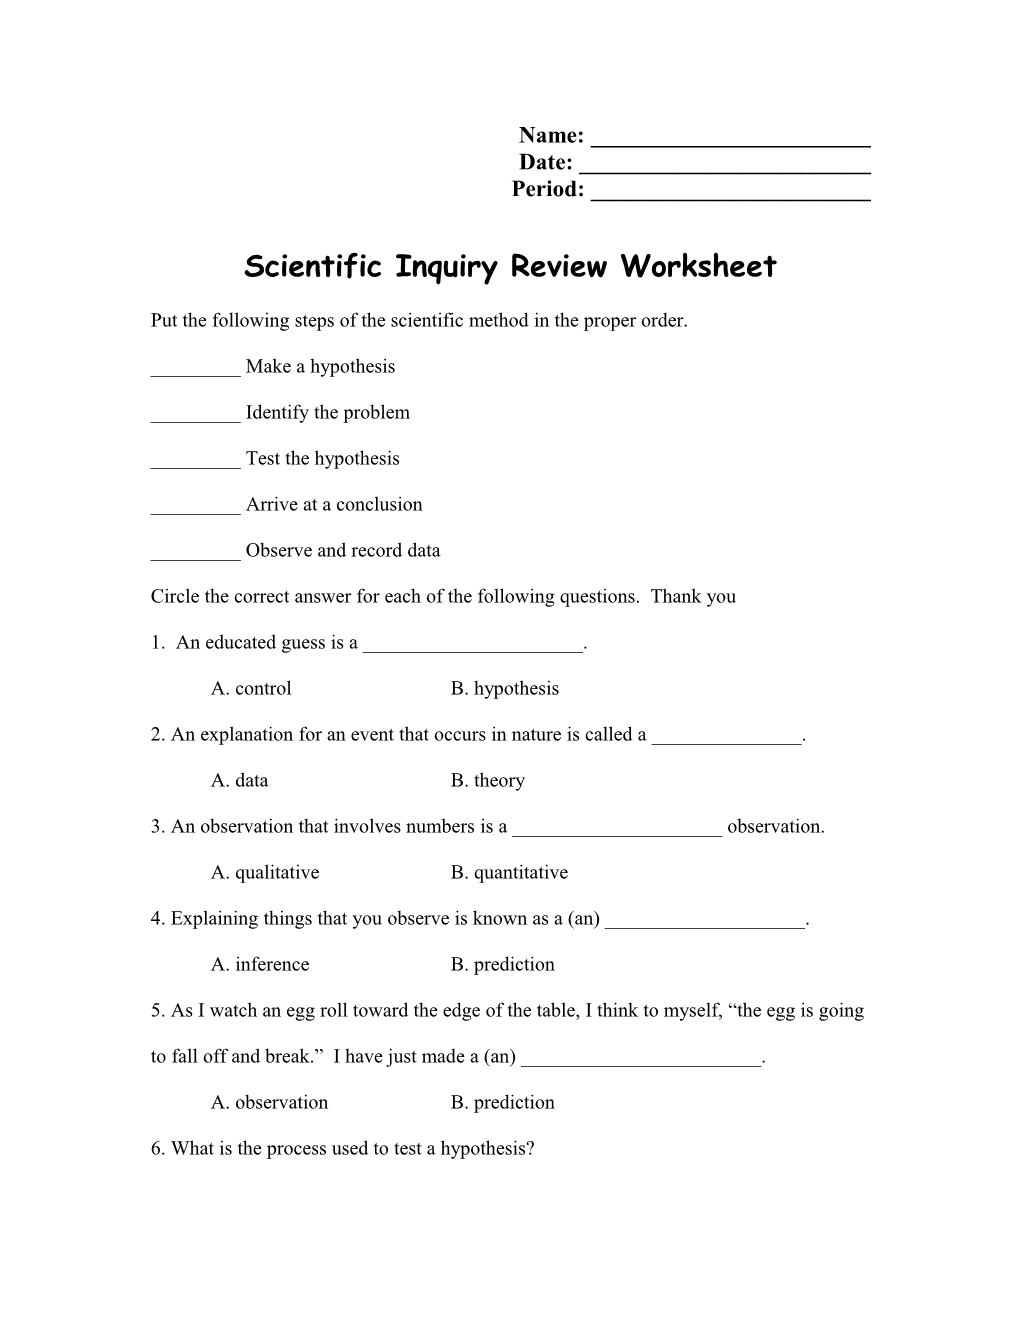 Scientific Inquiry Review Worksheet